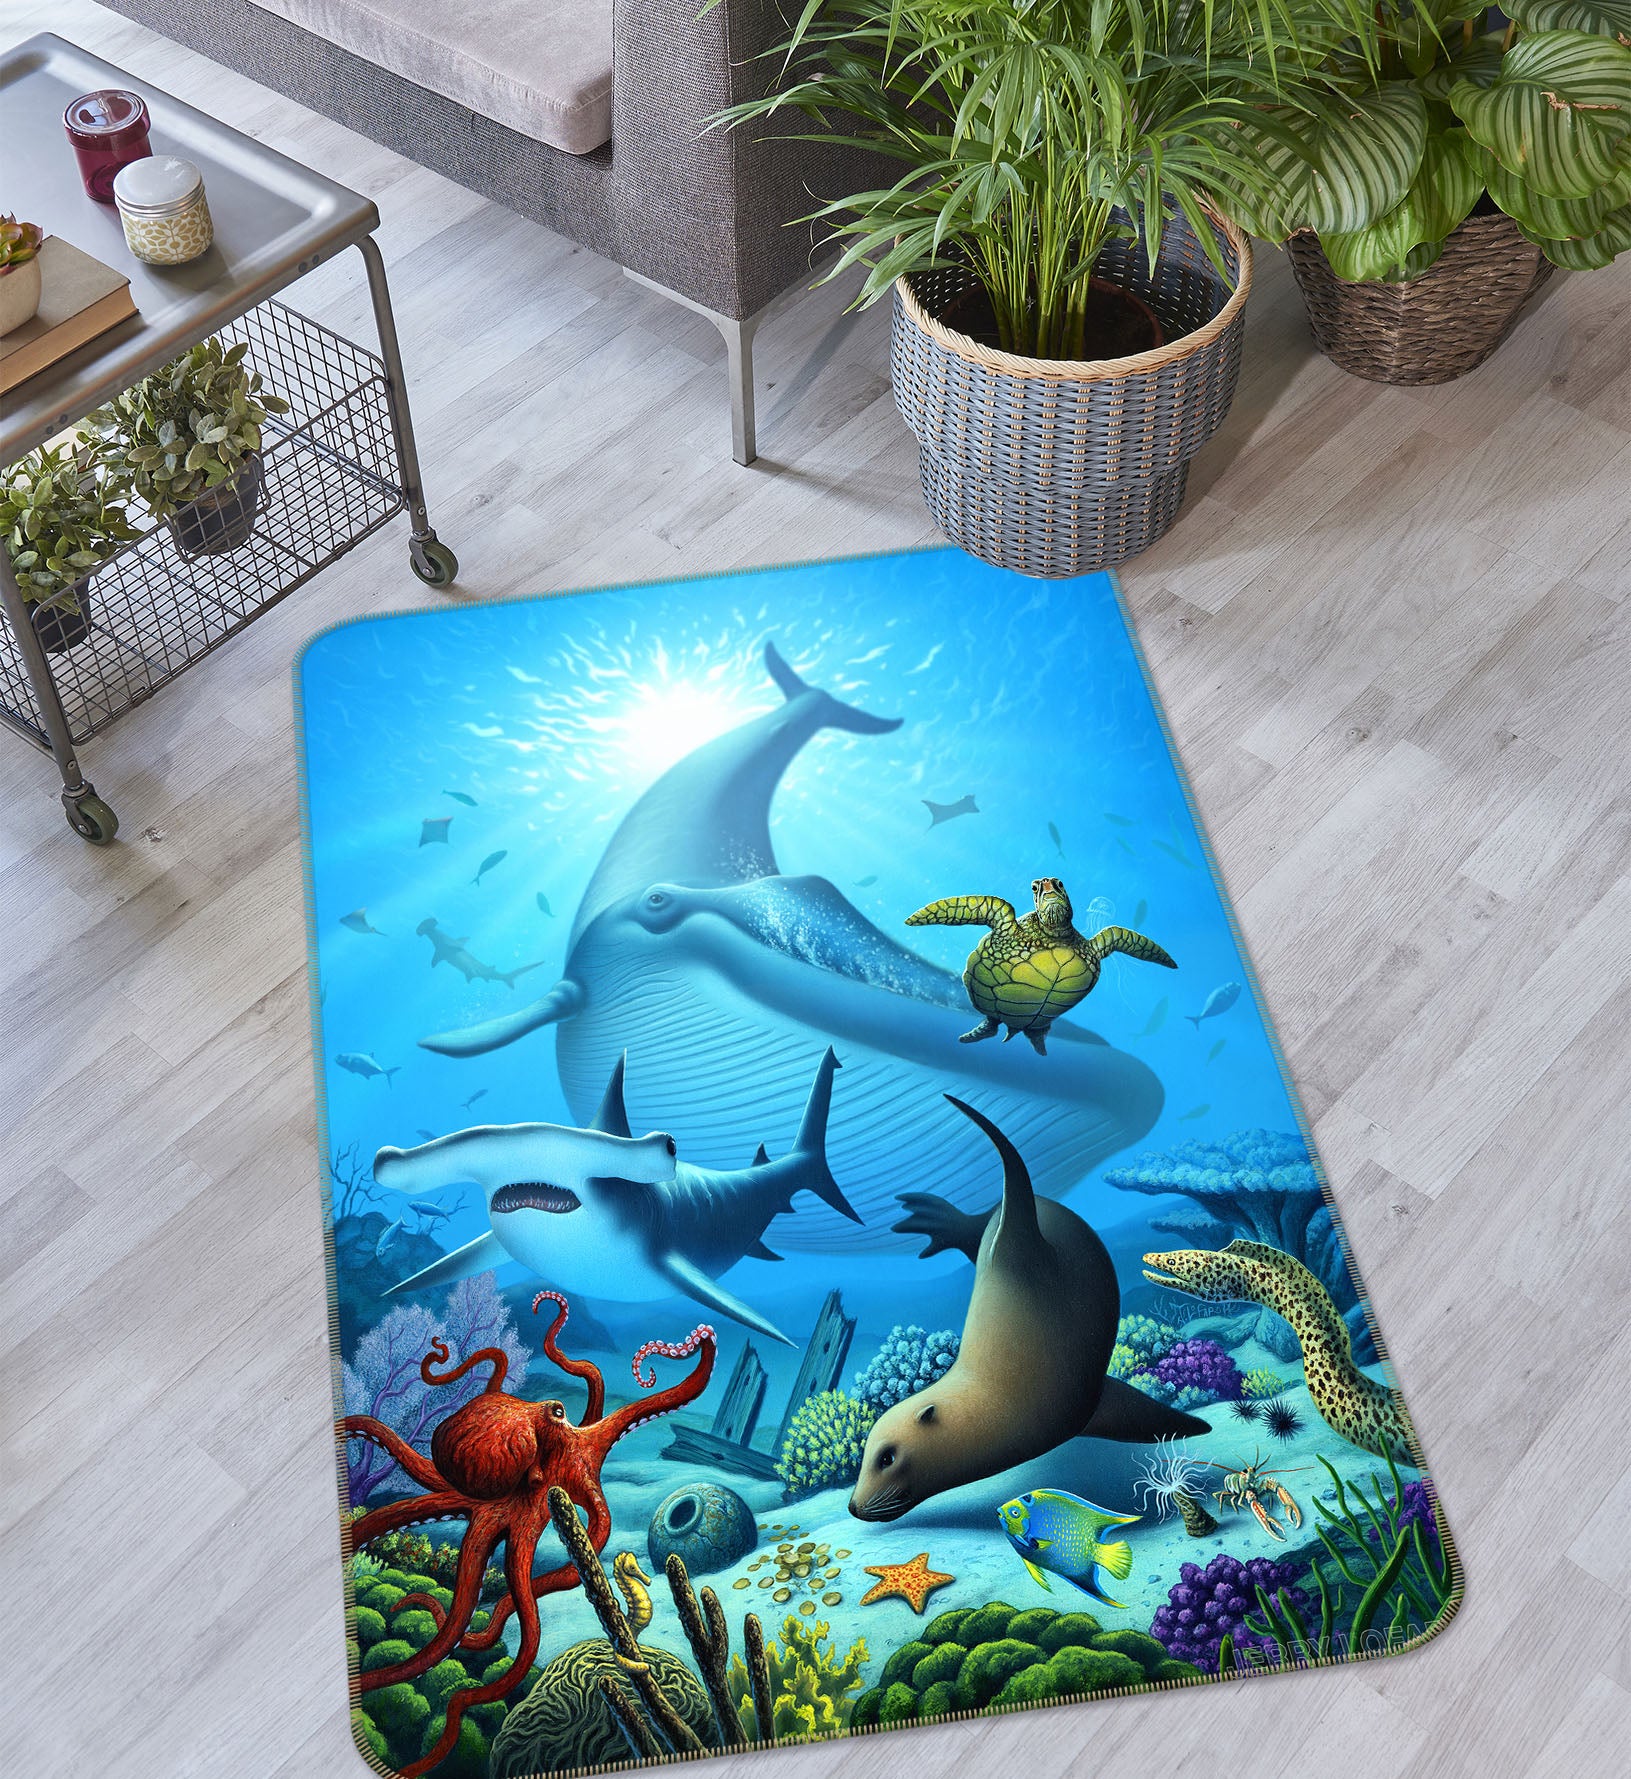 3D Seabed Fish Dolphin 83103 Jerry LoFaro Rug Non Slip Rug Mat